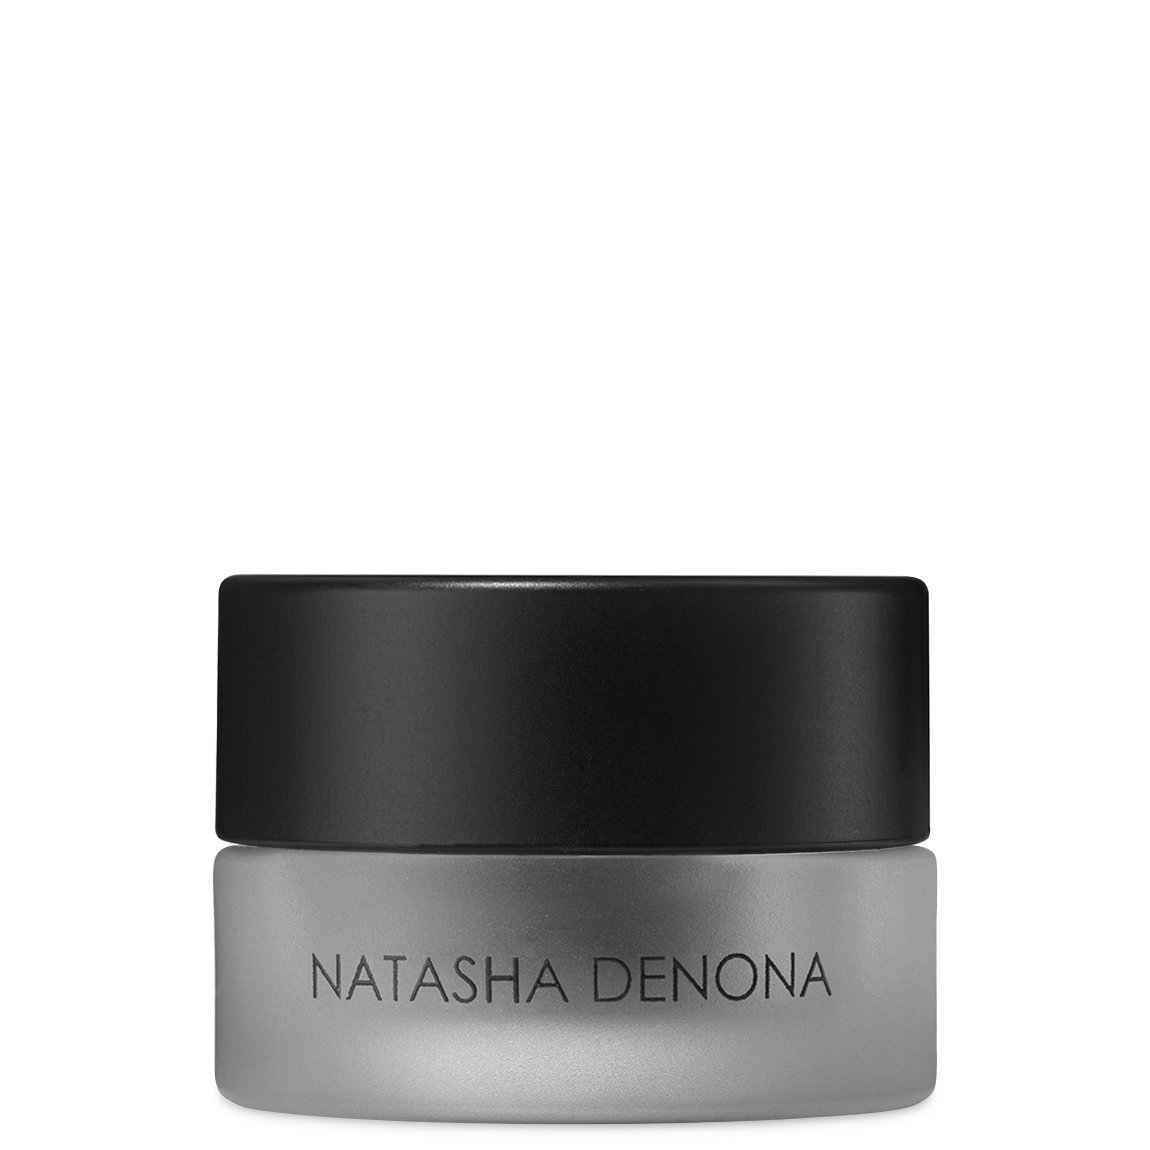 Natasha Denona Work & Set Cream Eyeliner Black alternative view 1.